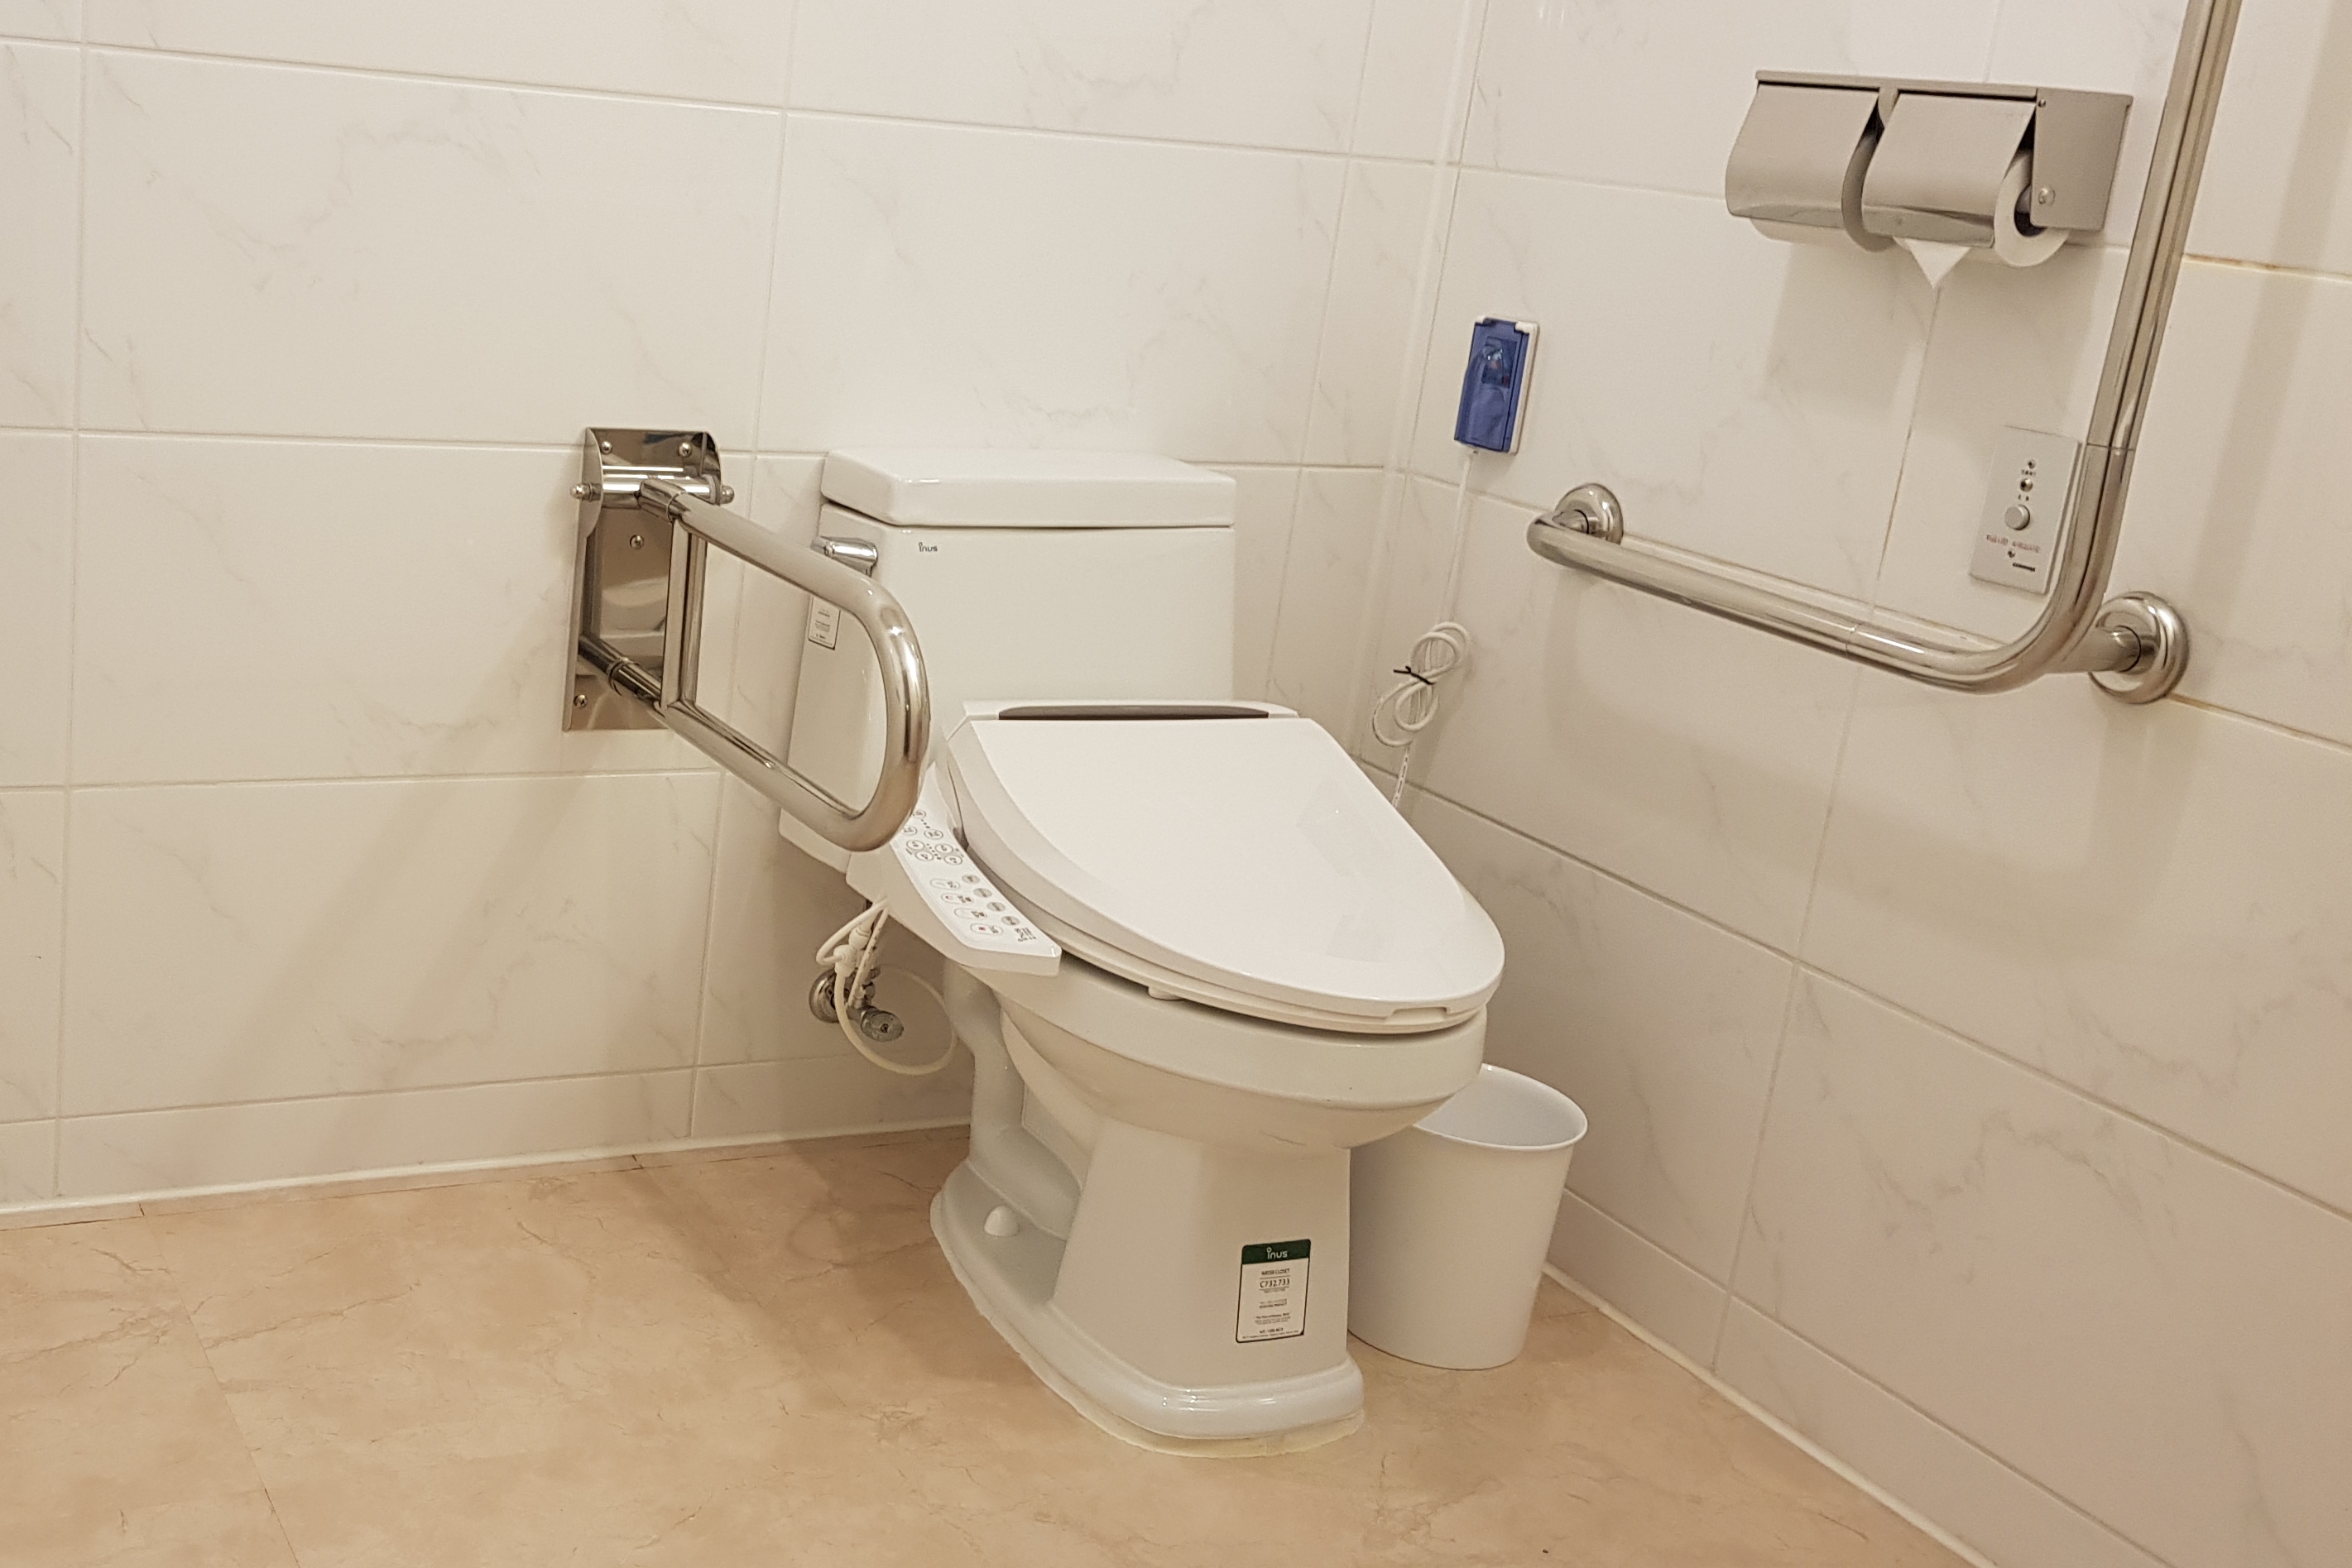 Bathroom  0 : Room restrooms of the Toyoko Inn Seoul Dongdaemun 2 equipped with toilet grab bars
